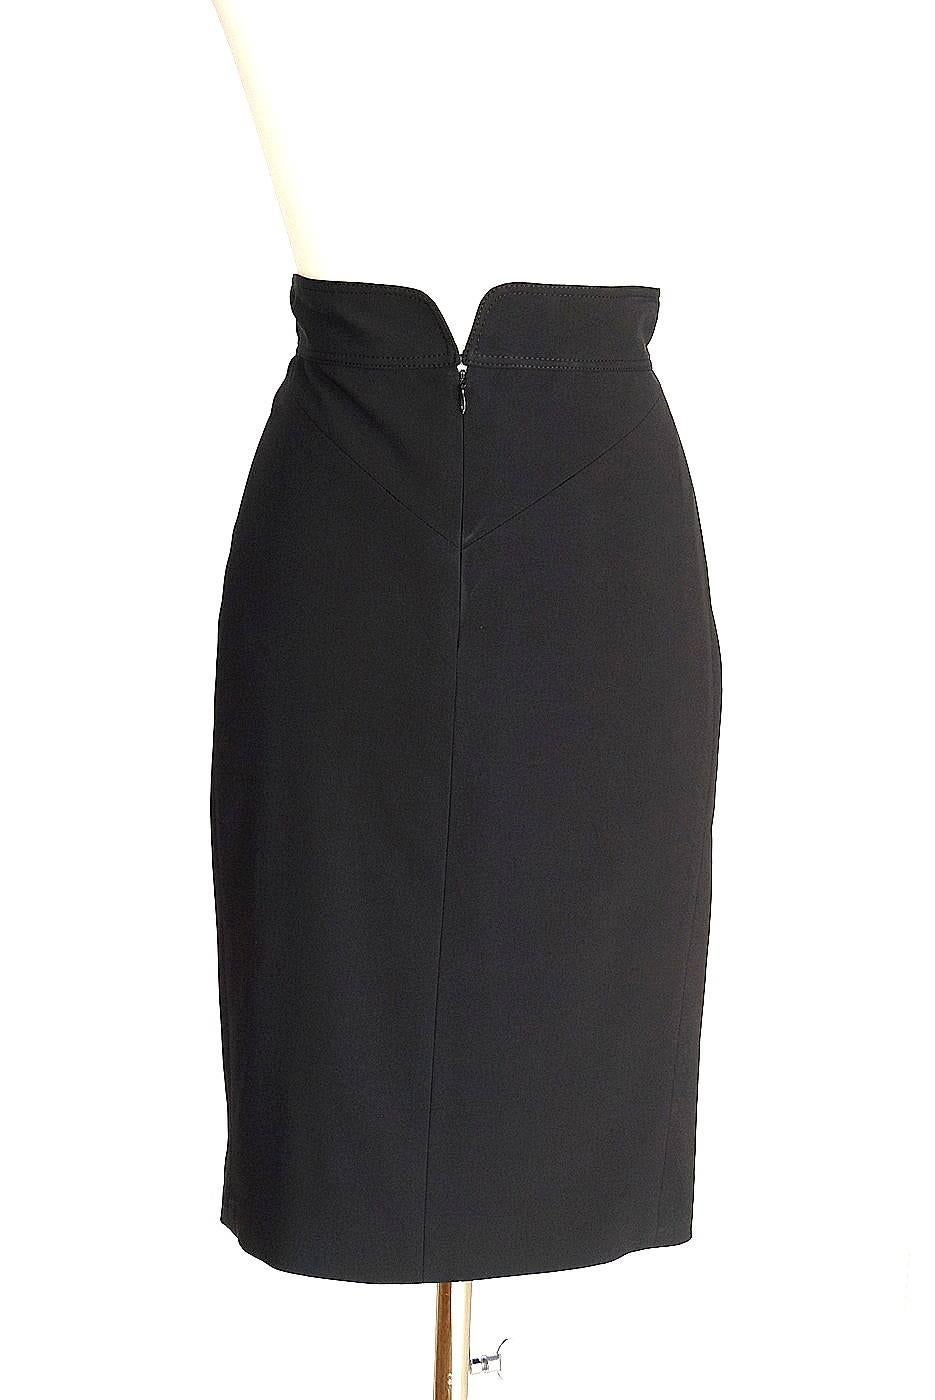 Black ZAC POSEN Skirt Beautifully Styled Ruffled Pencil 4 nwt